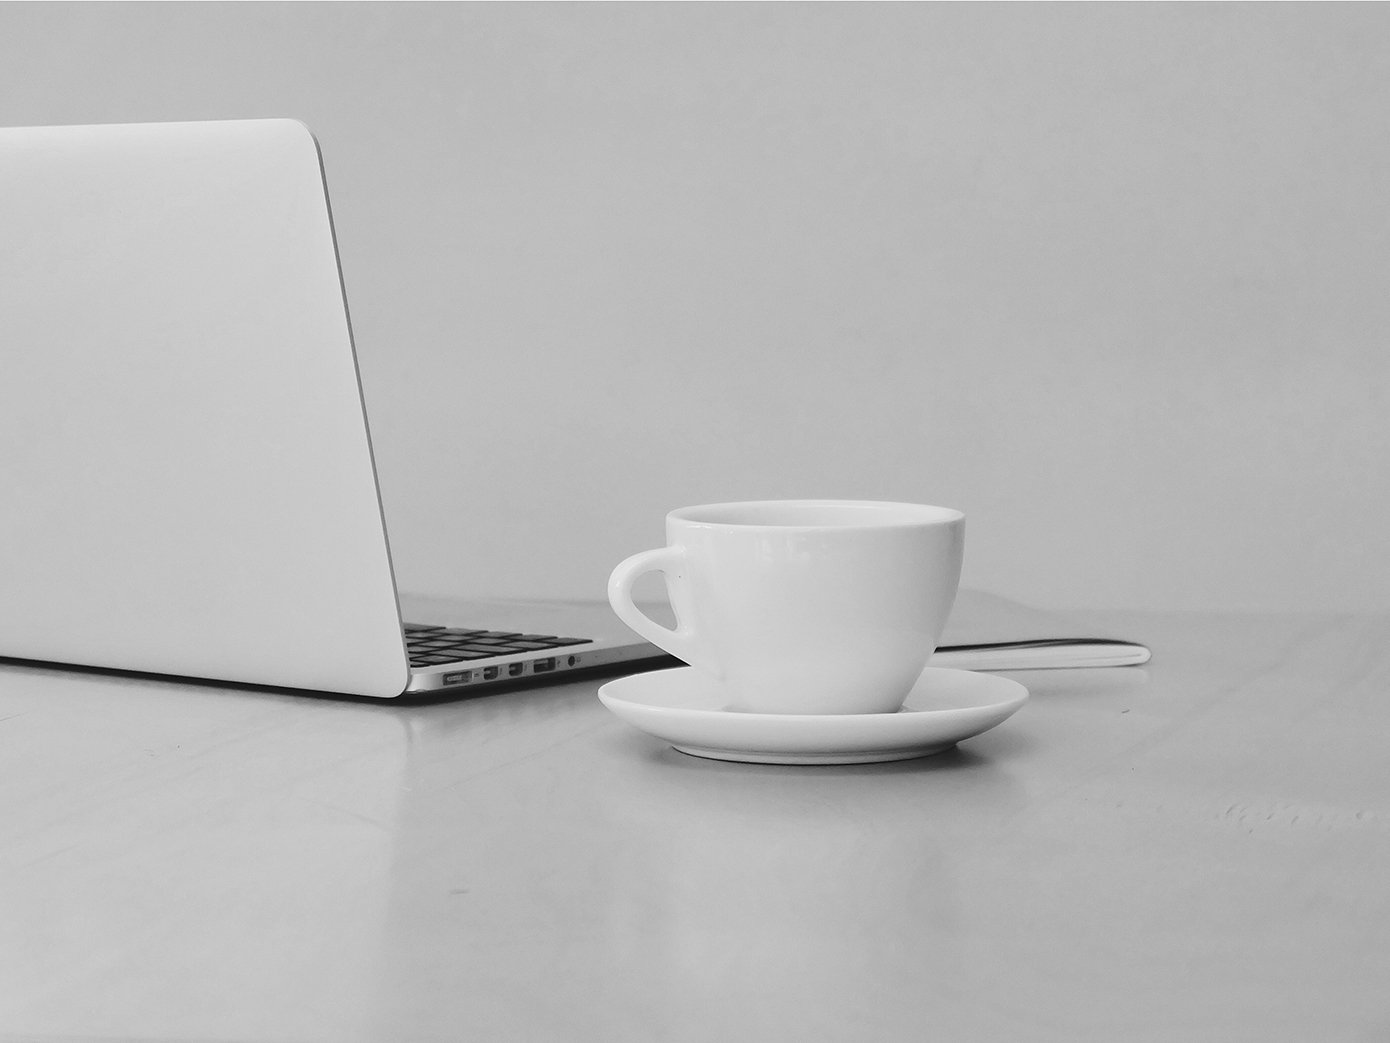 laptop and coffee.jpg